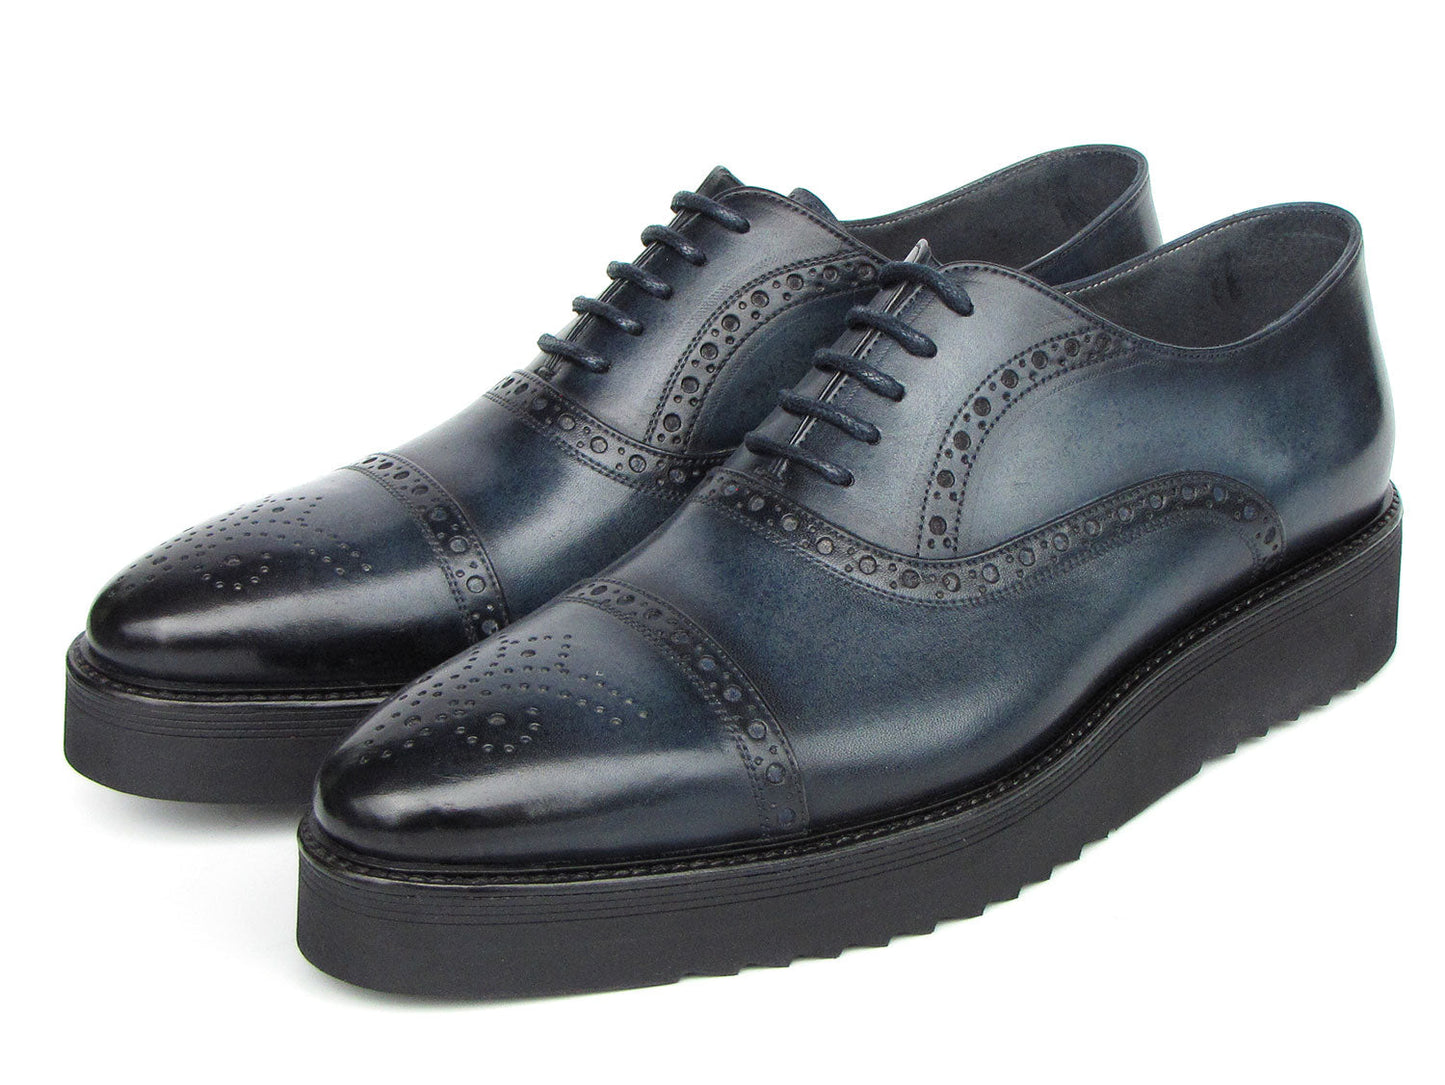 Paul Parkman Men's Smart Casual Cap Toe Oxford Shoes Navy Leather (ID#285-NVY-LTH)